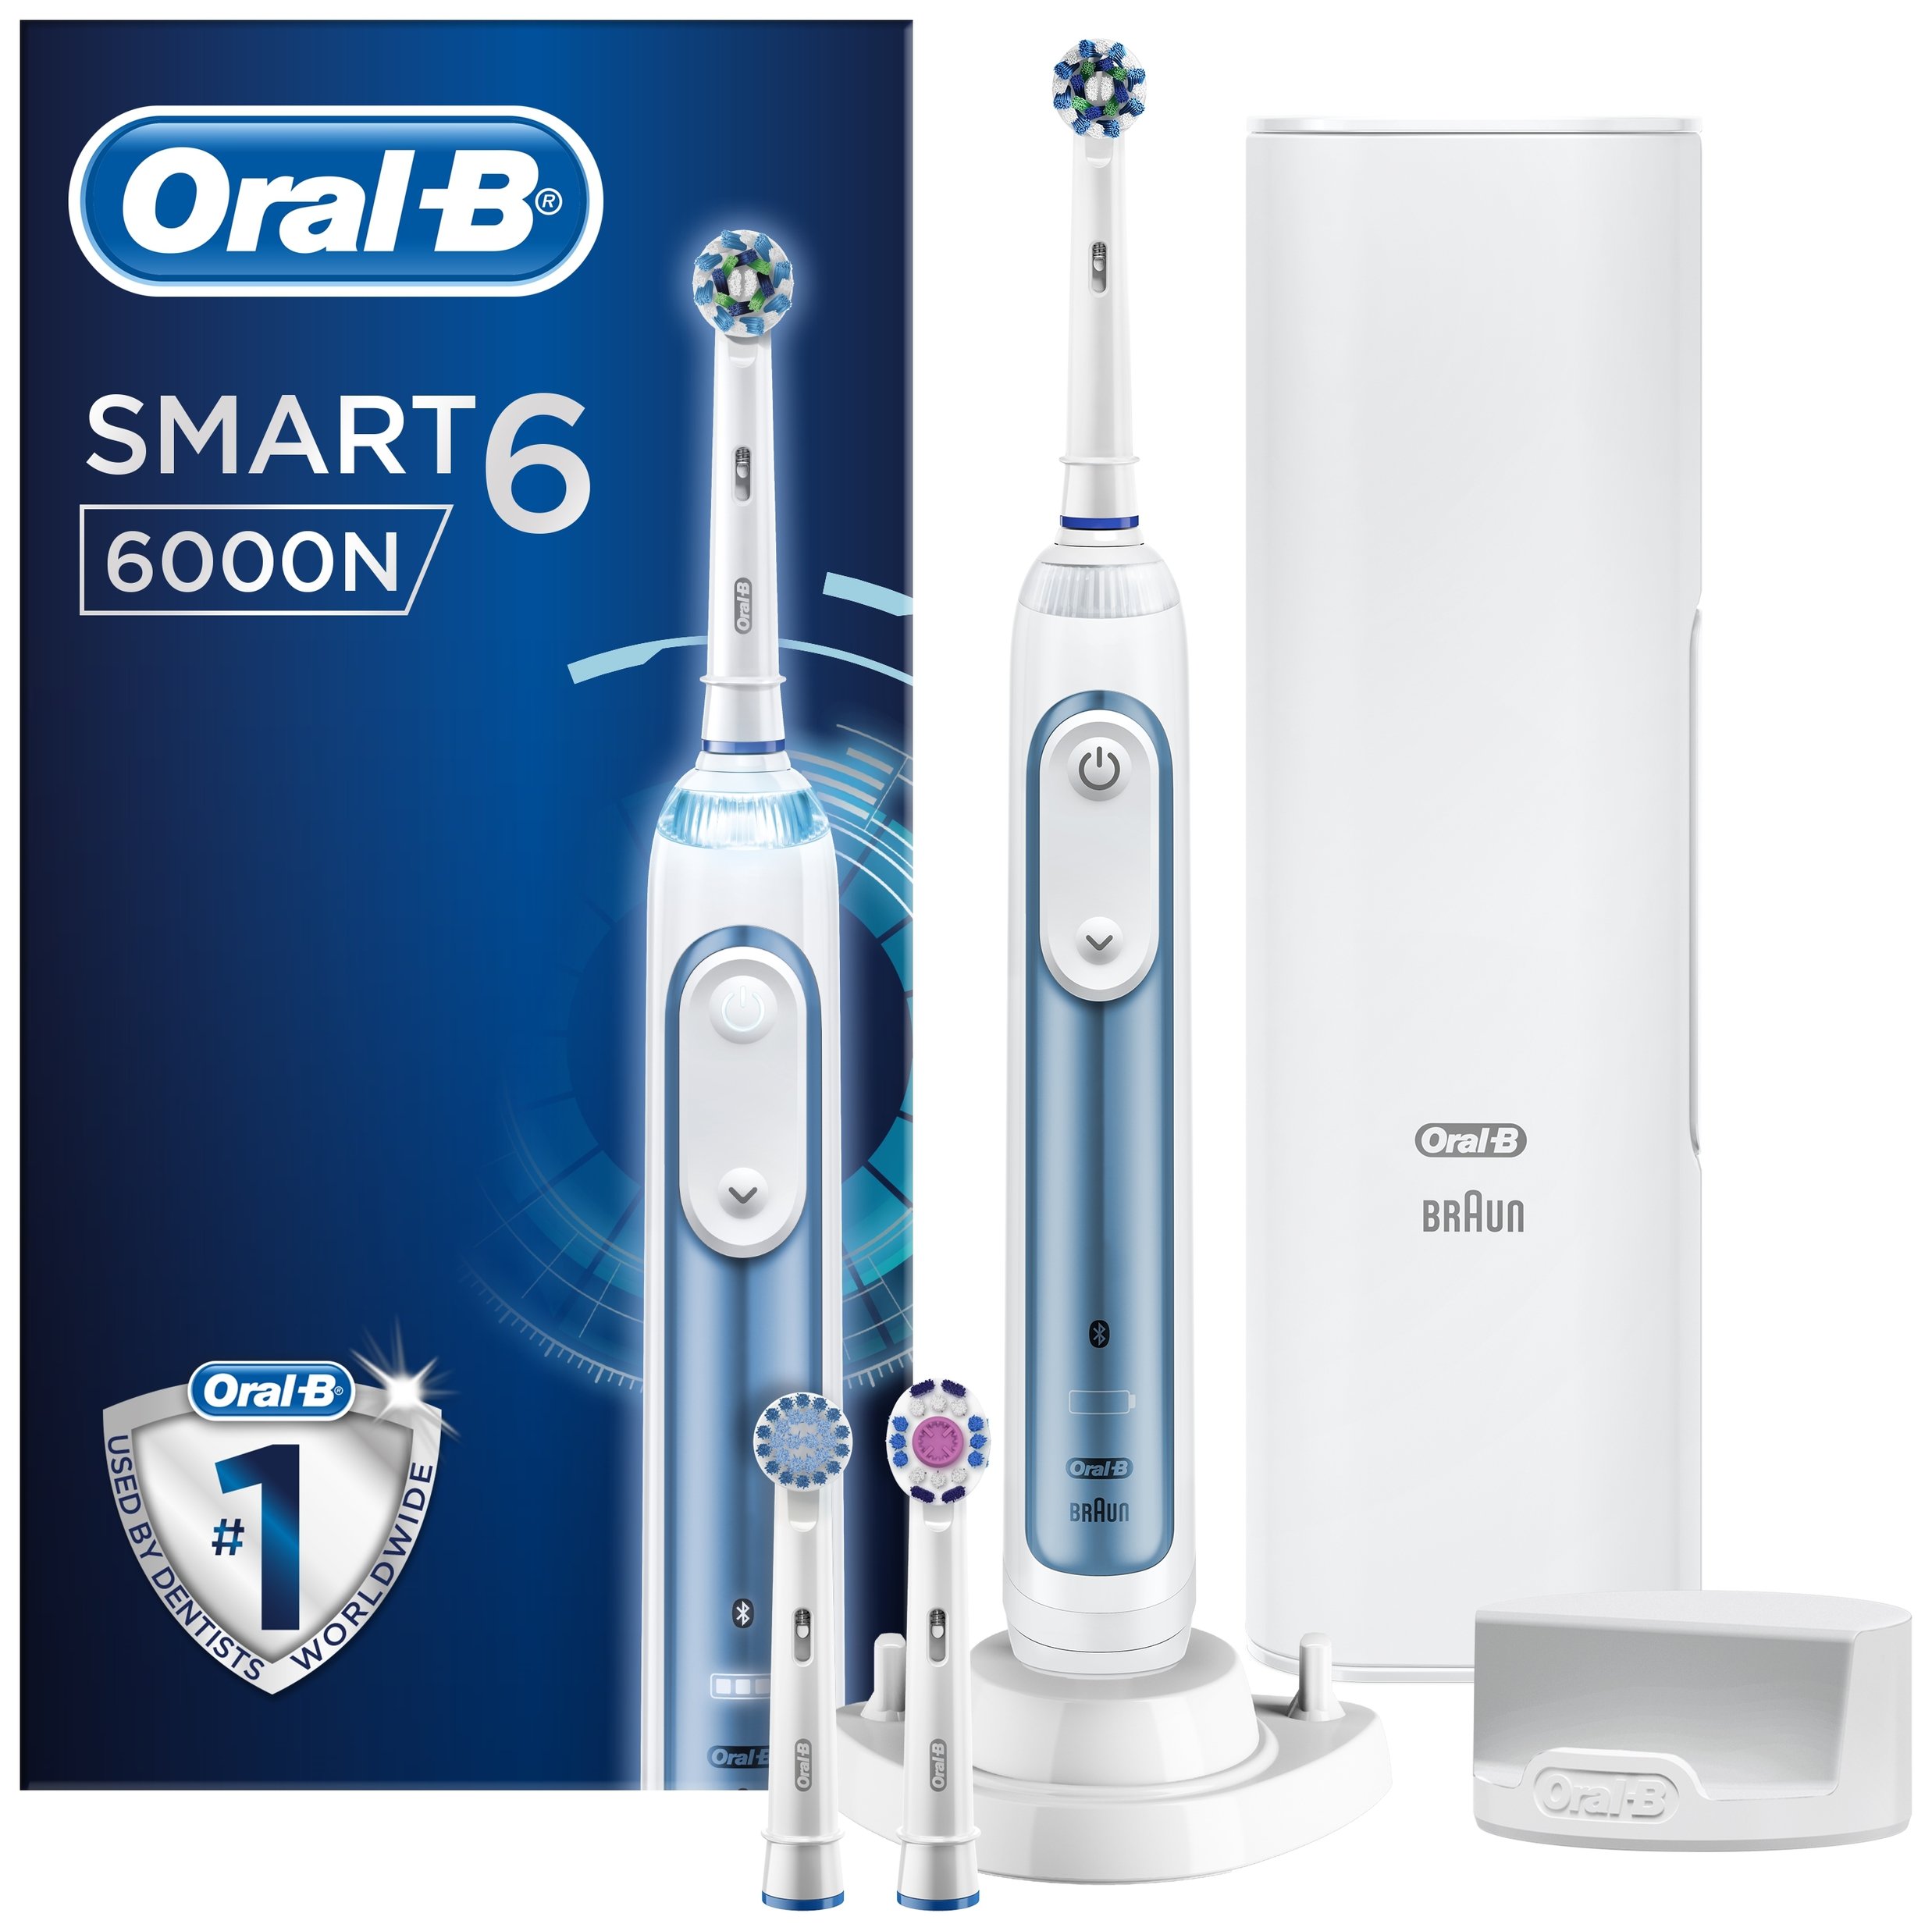 Oral-B Smart 6000N Electric Toothbrush